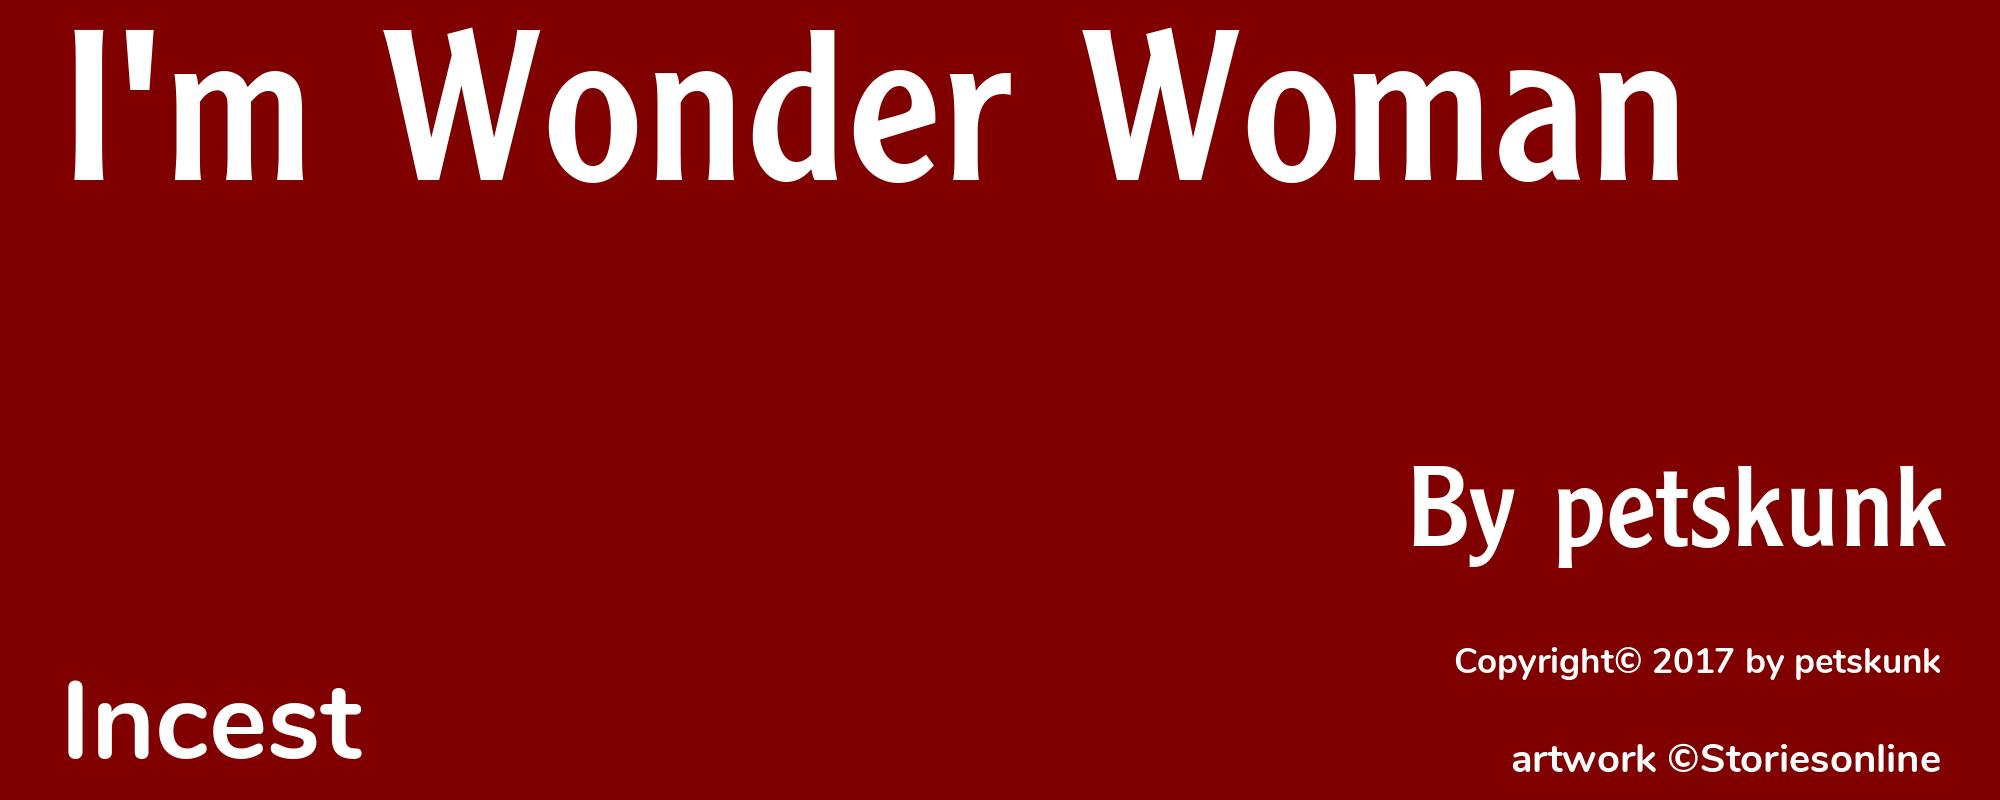 I'm Wonder Woman - Cover